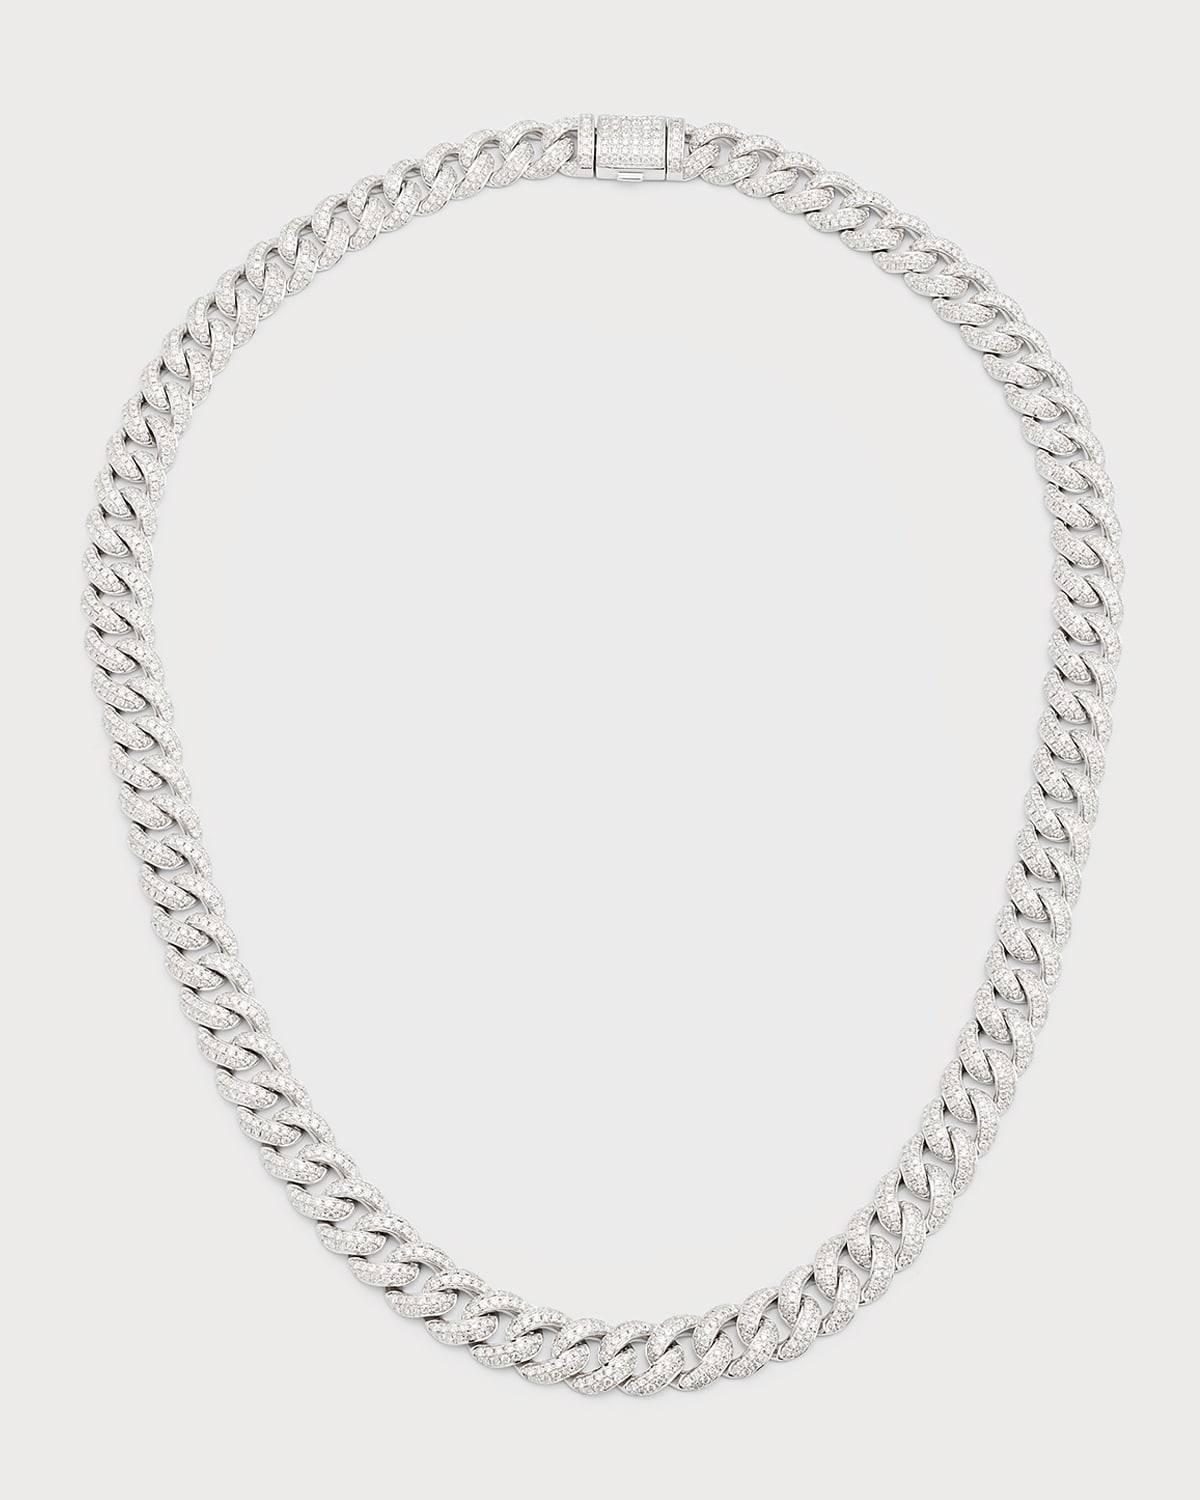 14K White Gold Pave Diamond Curb Chain Necklace, 18"L